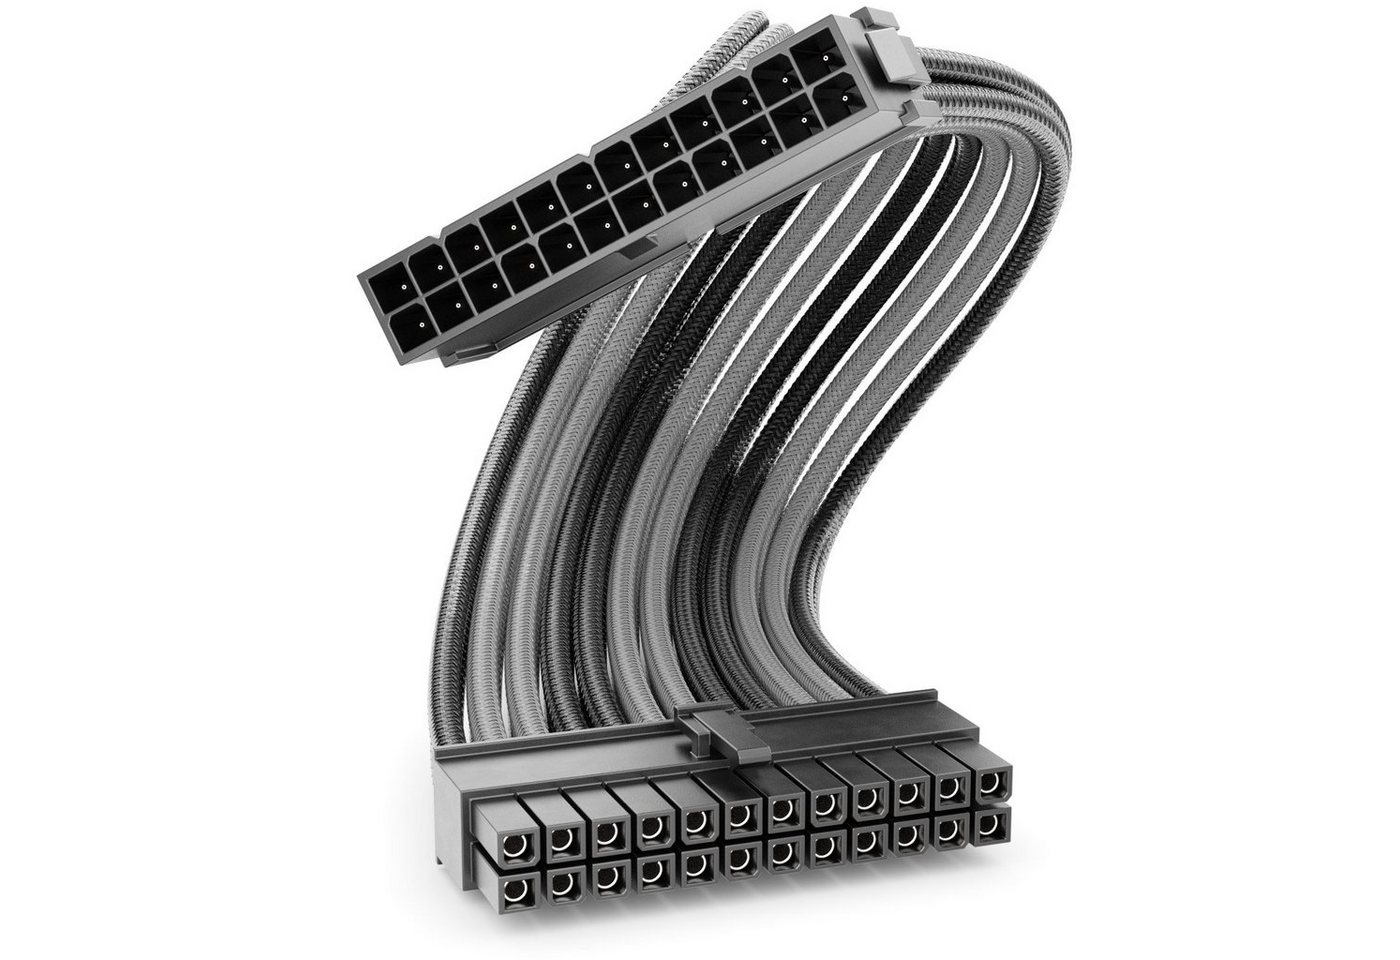 deleyCON deleyCON 24-Pin ATX Netzteil Kabel Intern 30cm 18 AWG PSU Mainboard Computer-Kabel von deleyCON